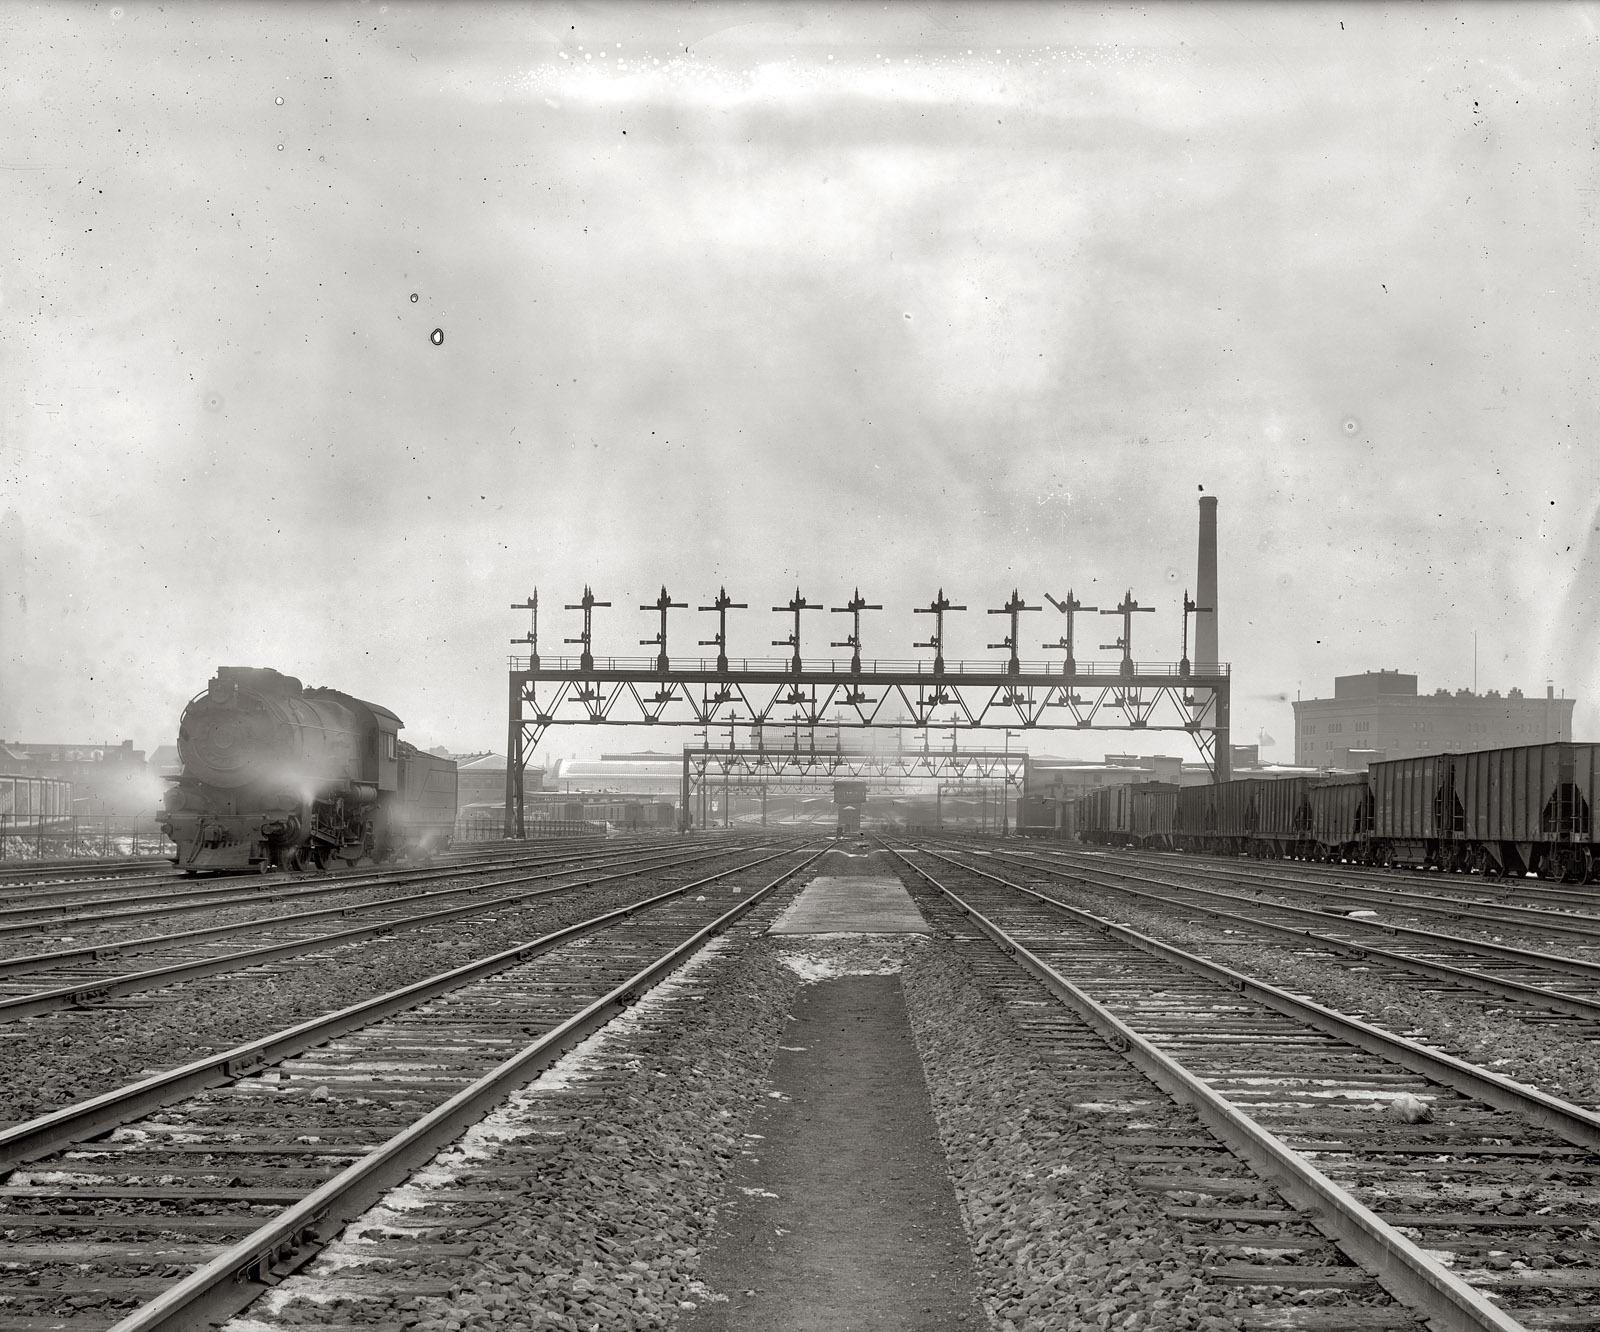 "Union Station tracks, Washington, circa 1920." National Photo Company Collection glass negative. View full size.